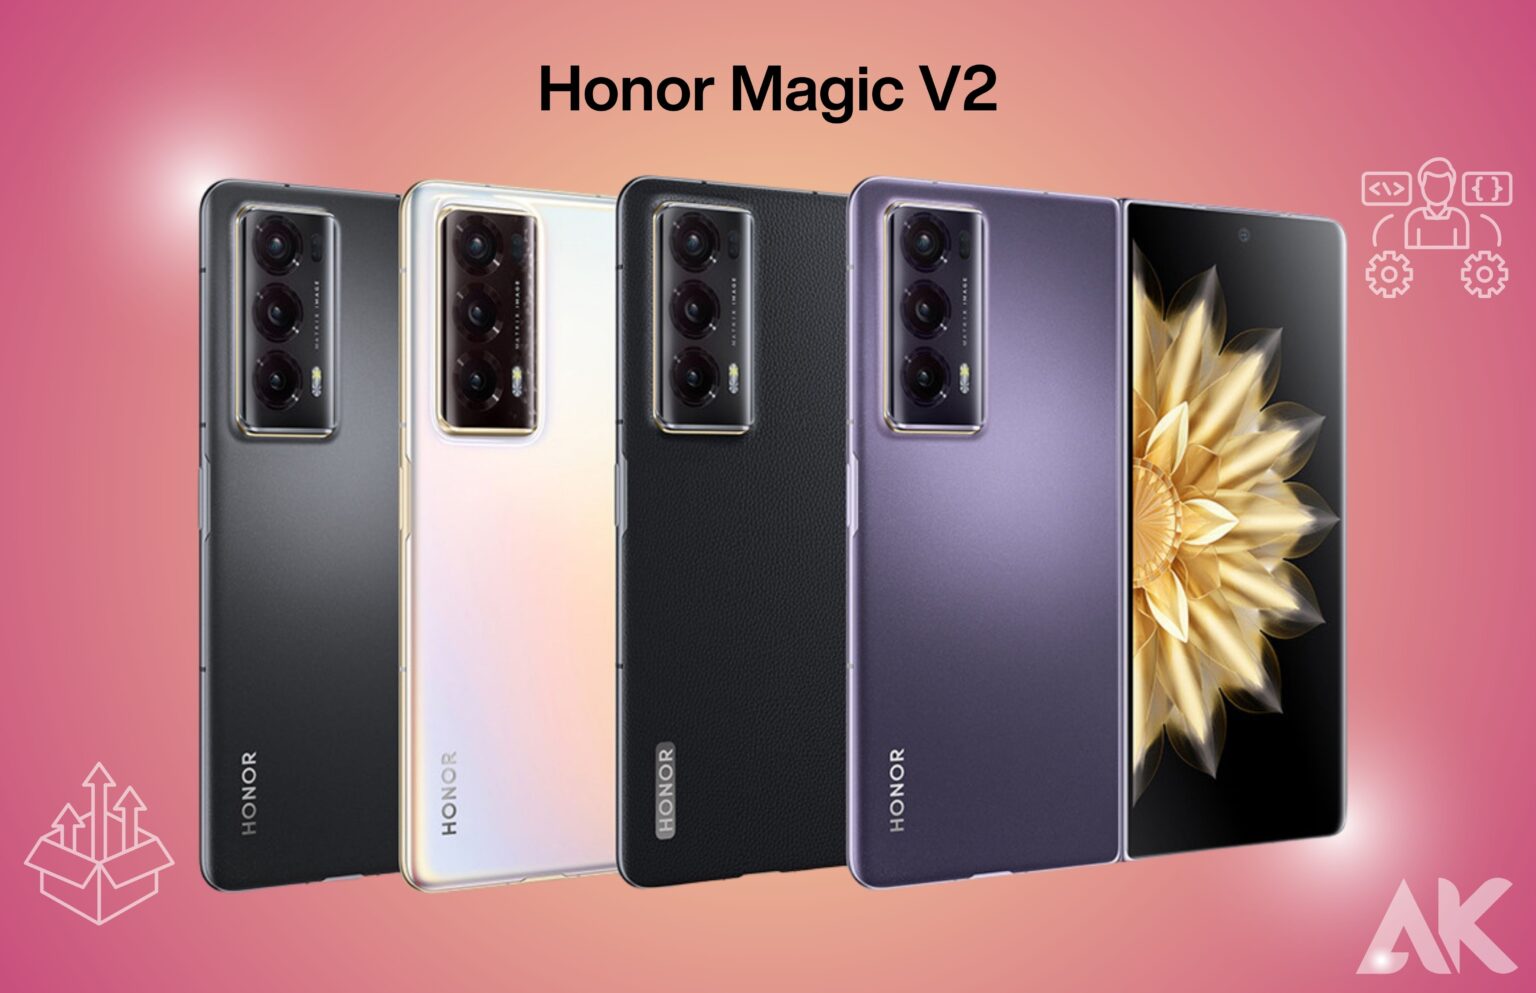 Next-Gen Tech Arrives: Honor Magic V2 USA Release Date Announced